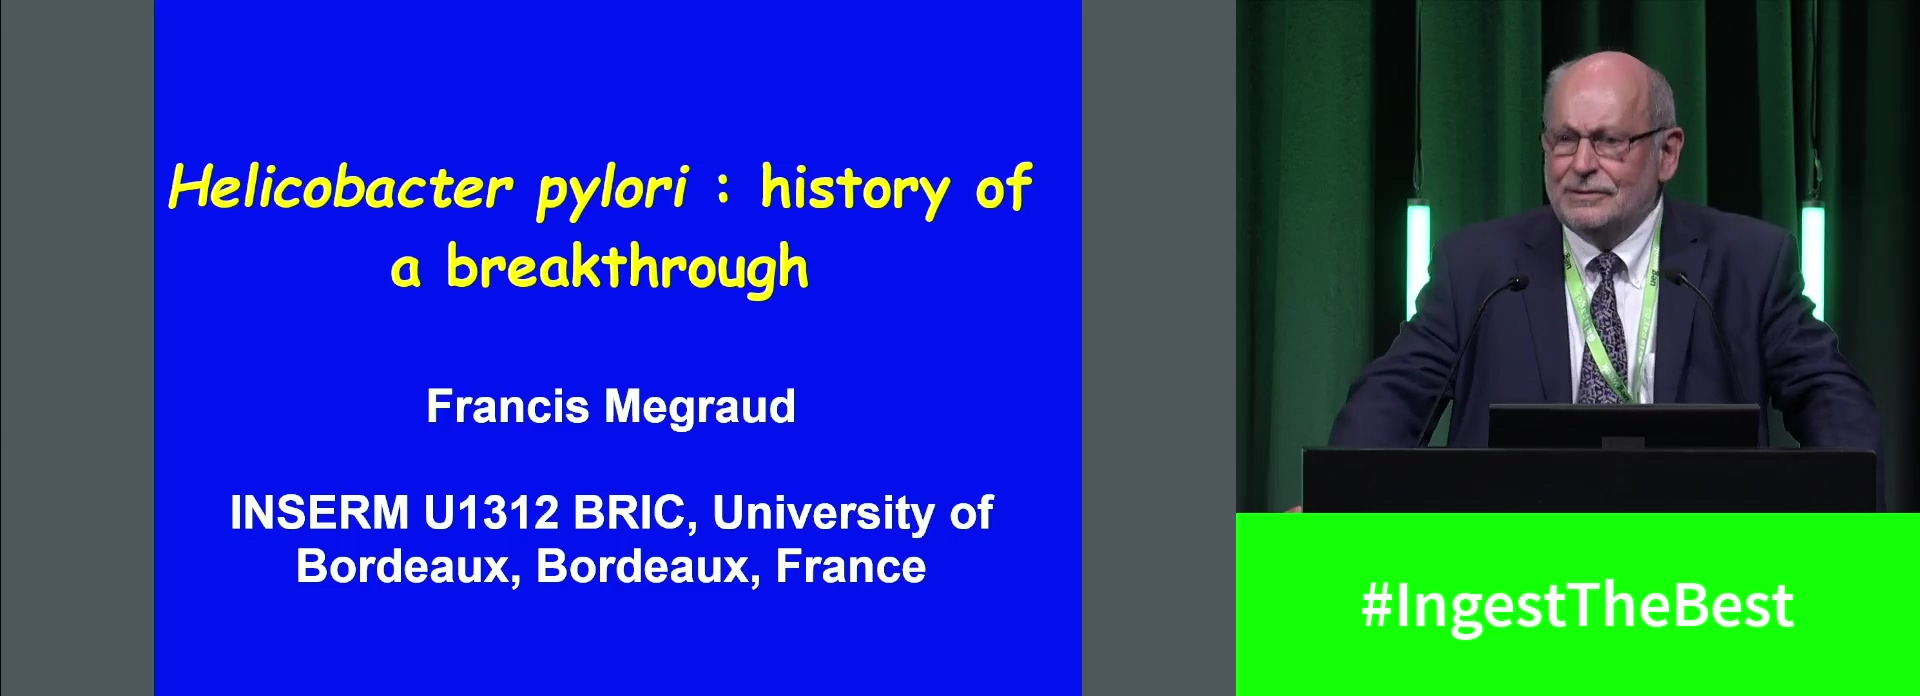 H. pylori: History of a breakthrough